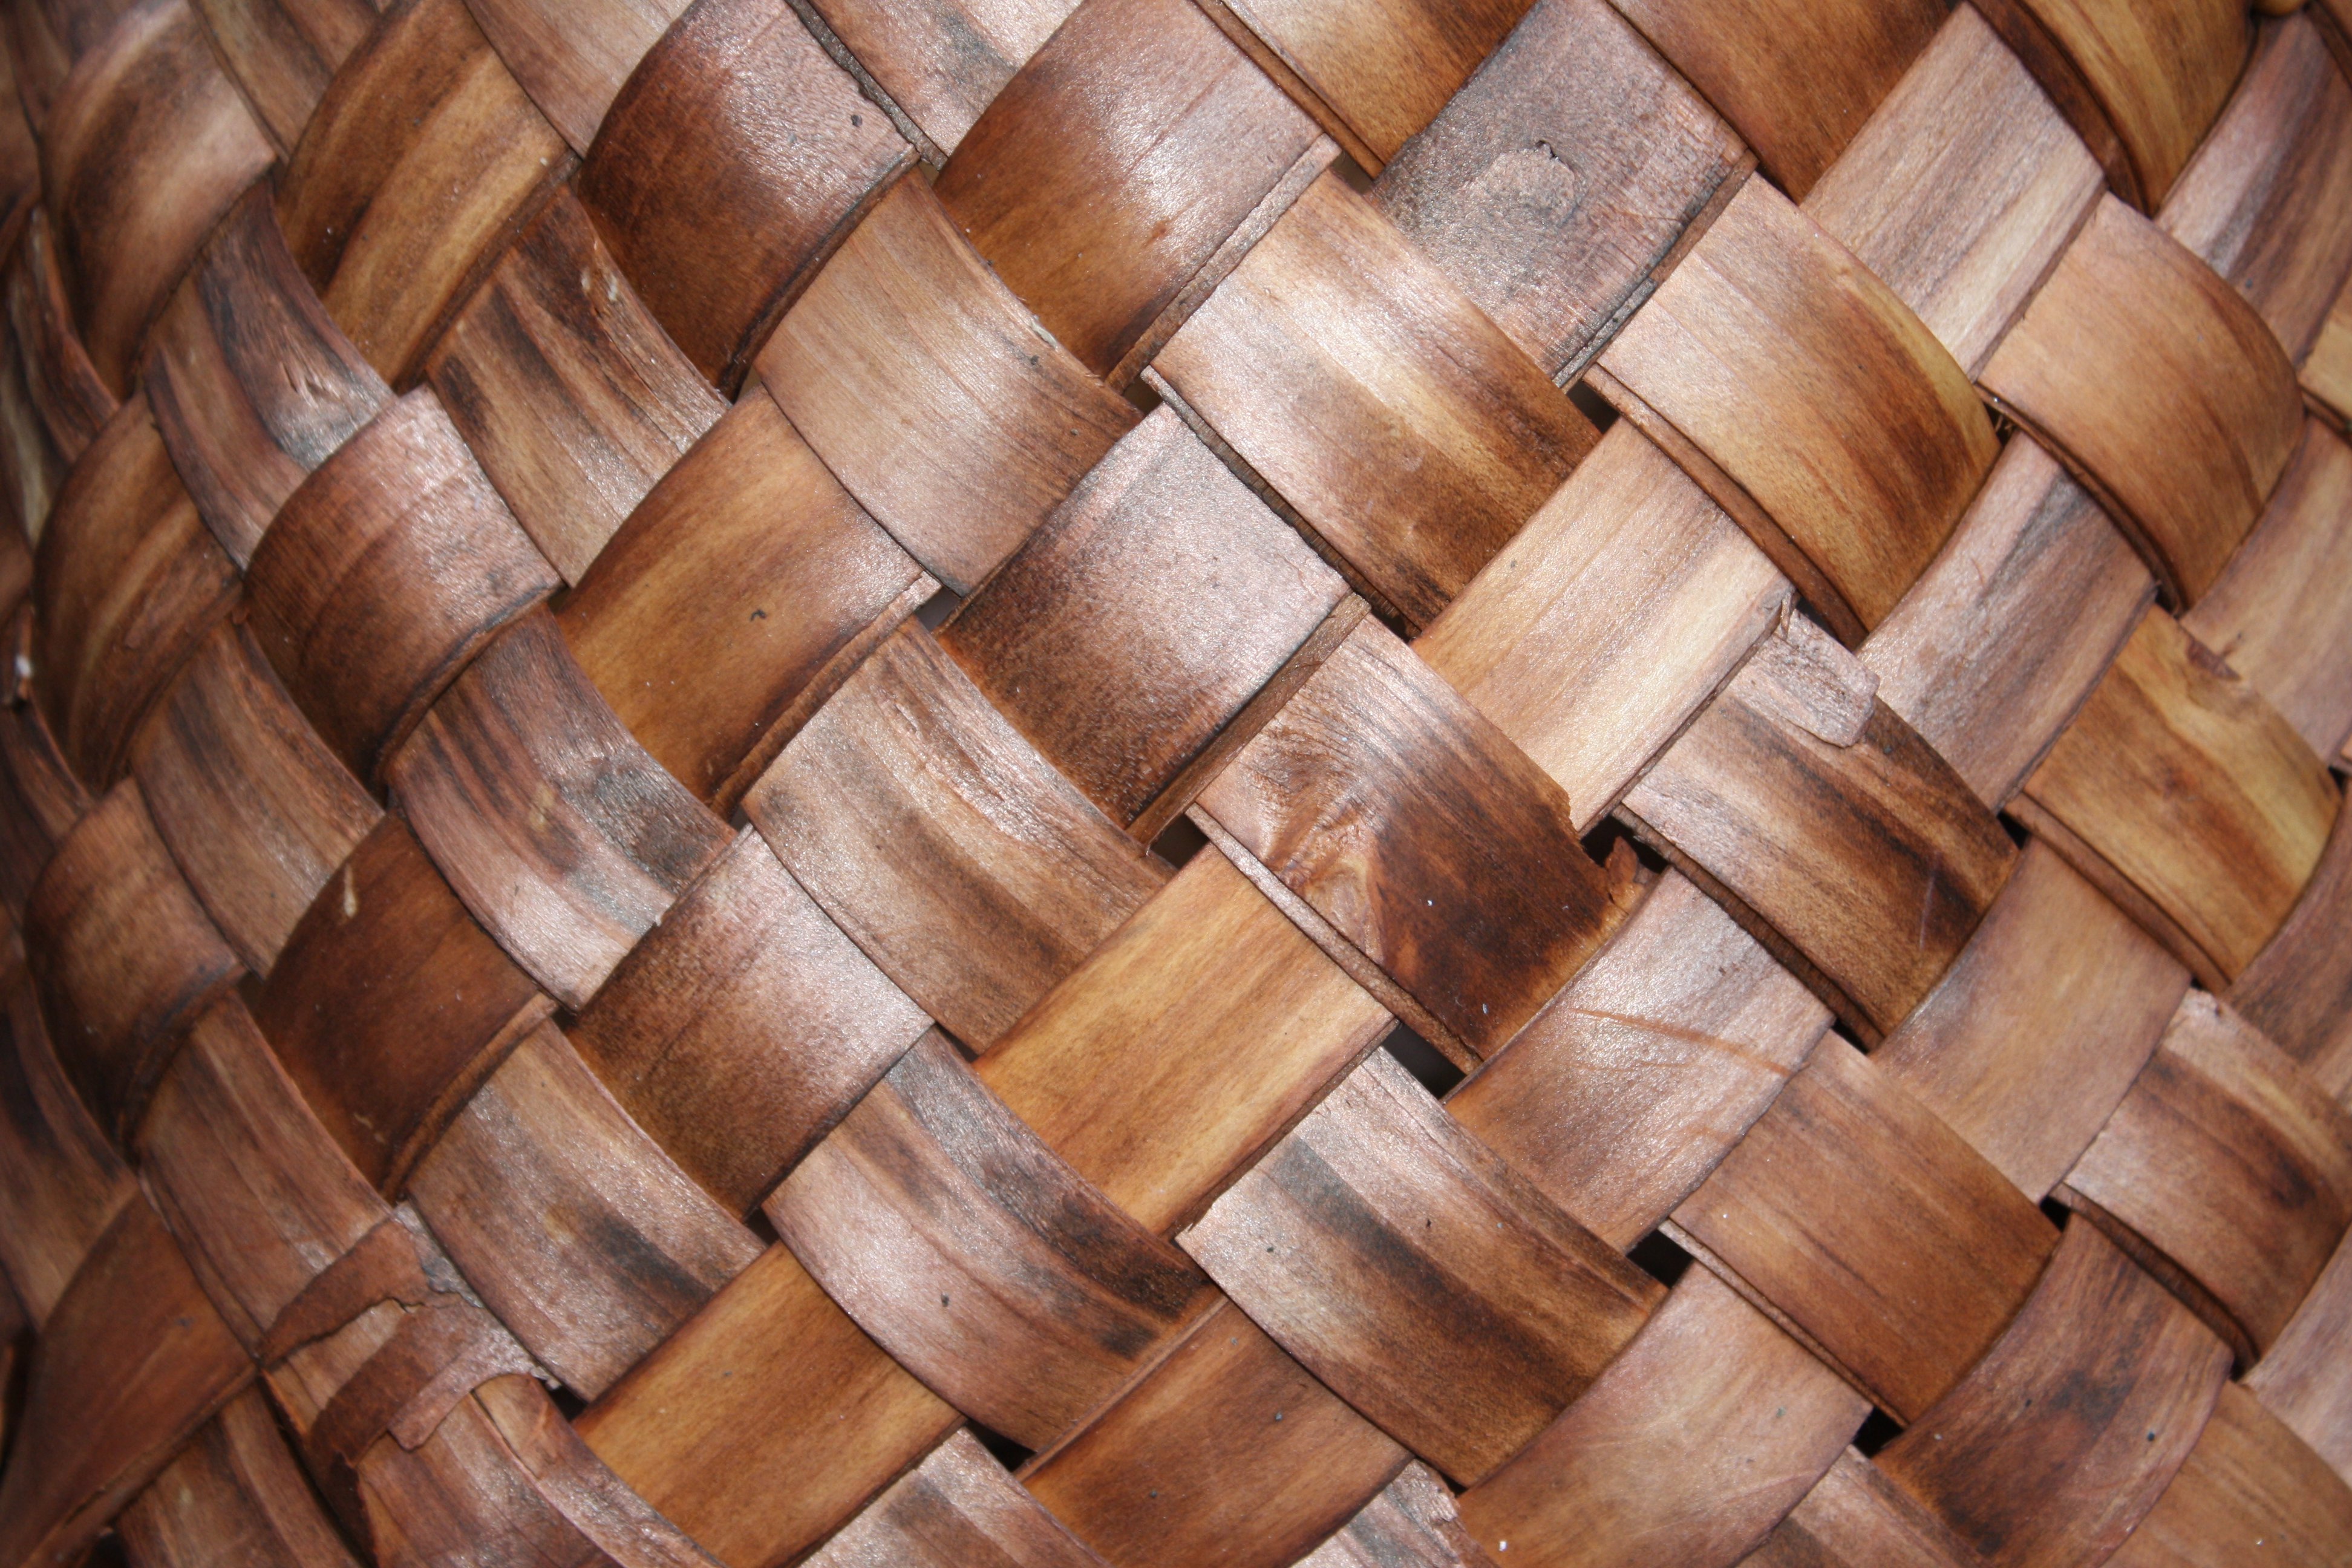 Woven Basket Texture Picture | Free Photograph | Photos ...
